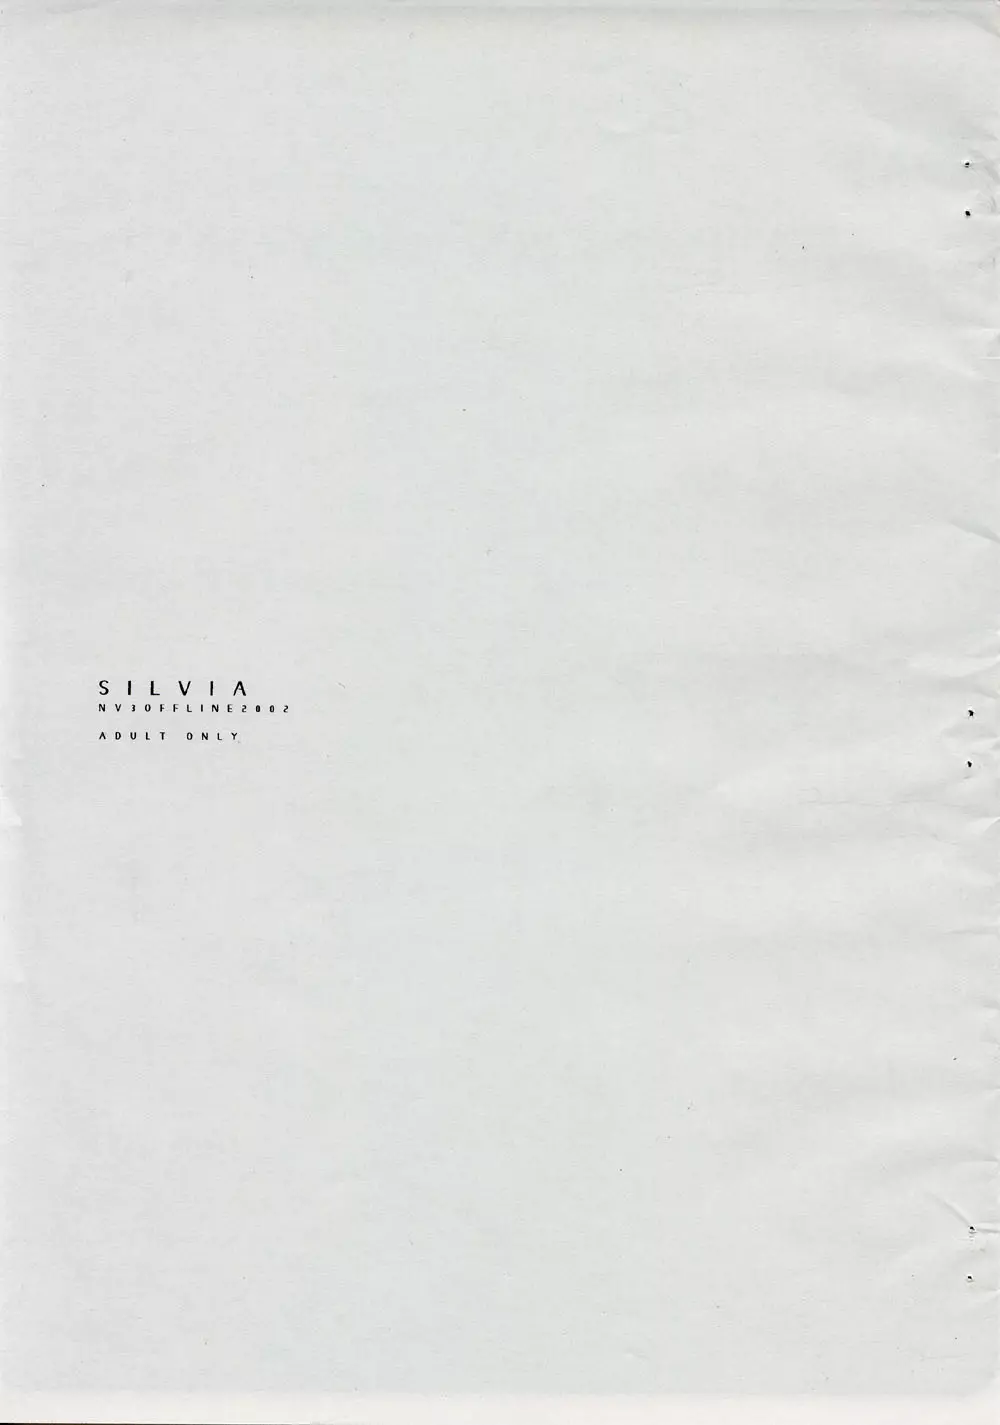 SILVIA - page1